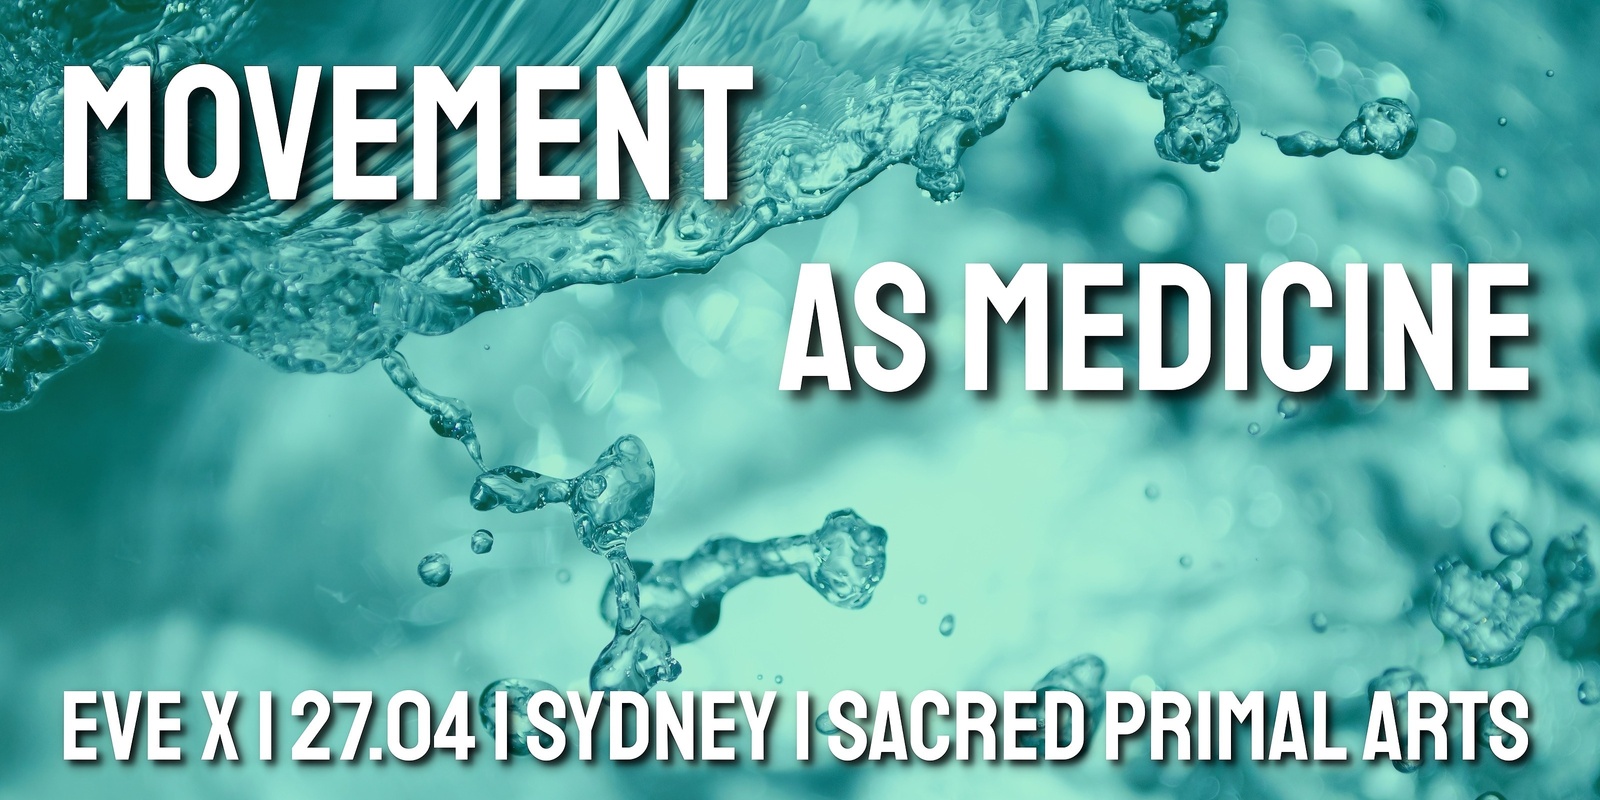 Banner image for SYDNEY Movement as Medicine